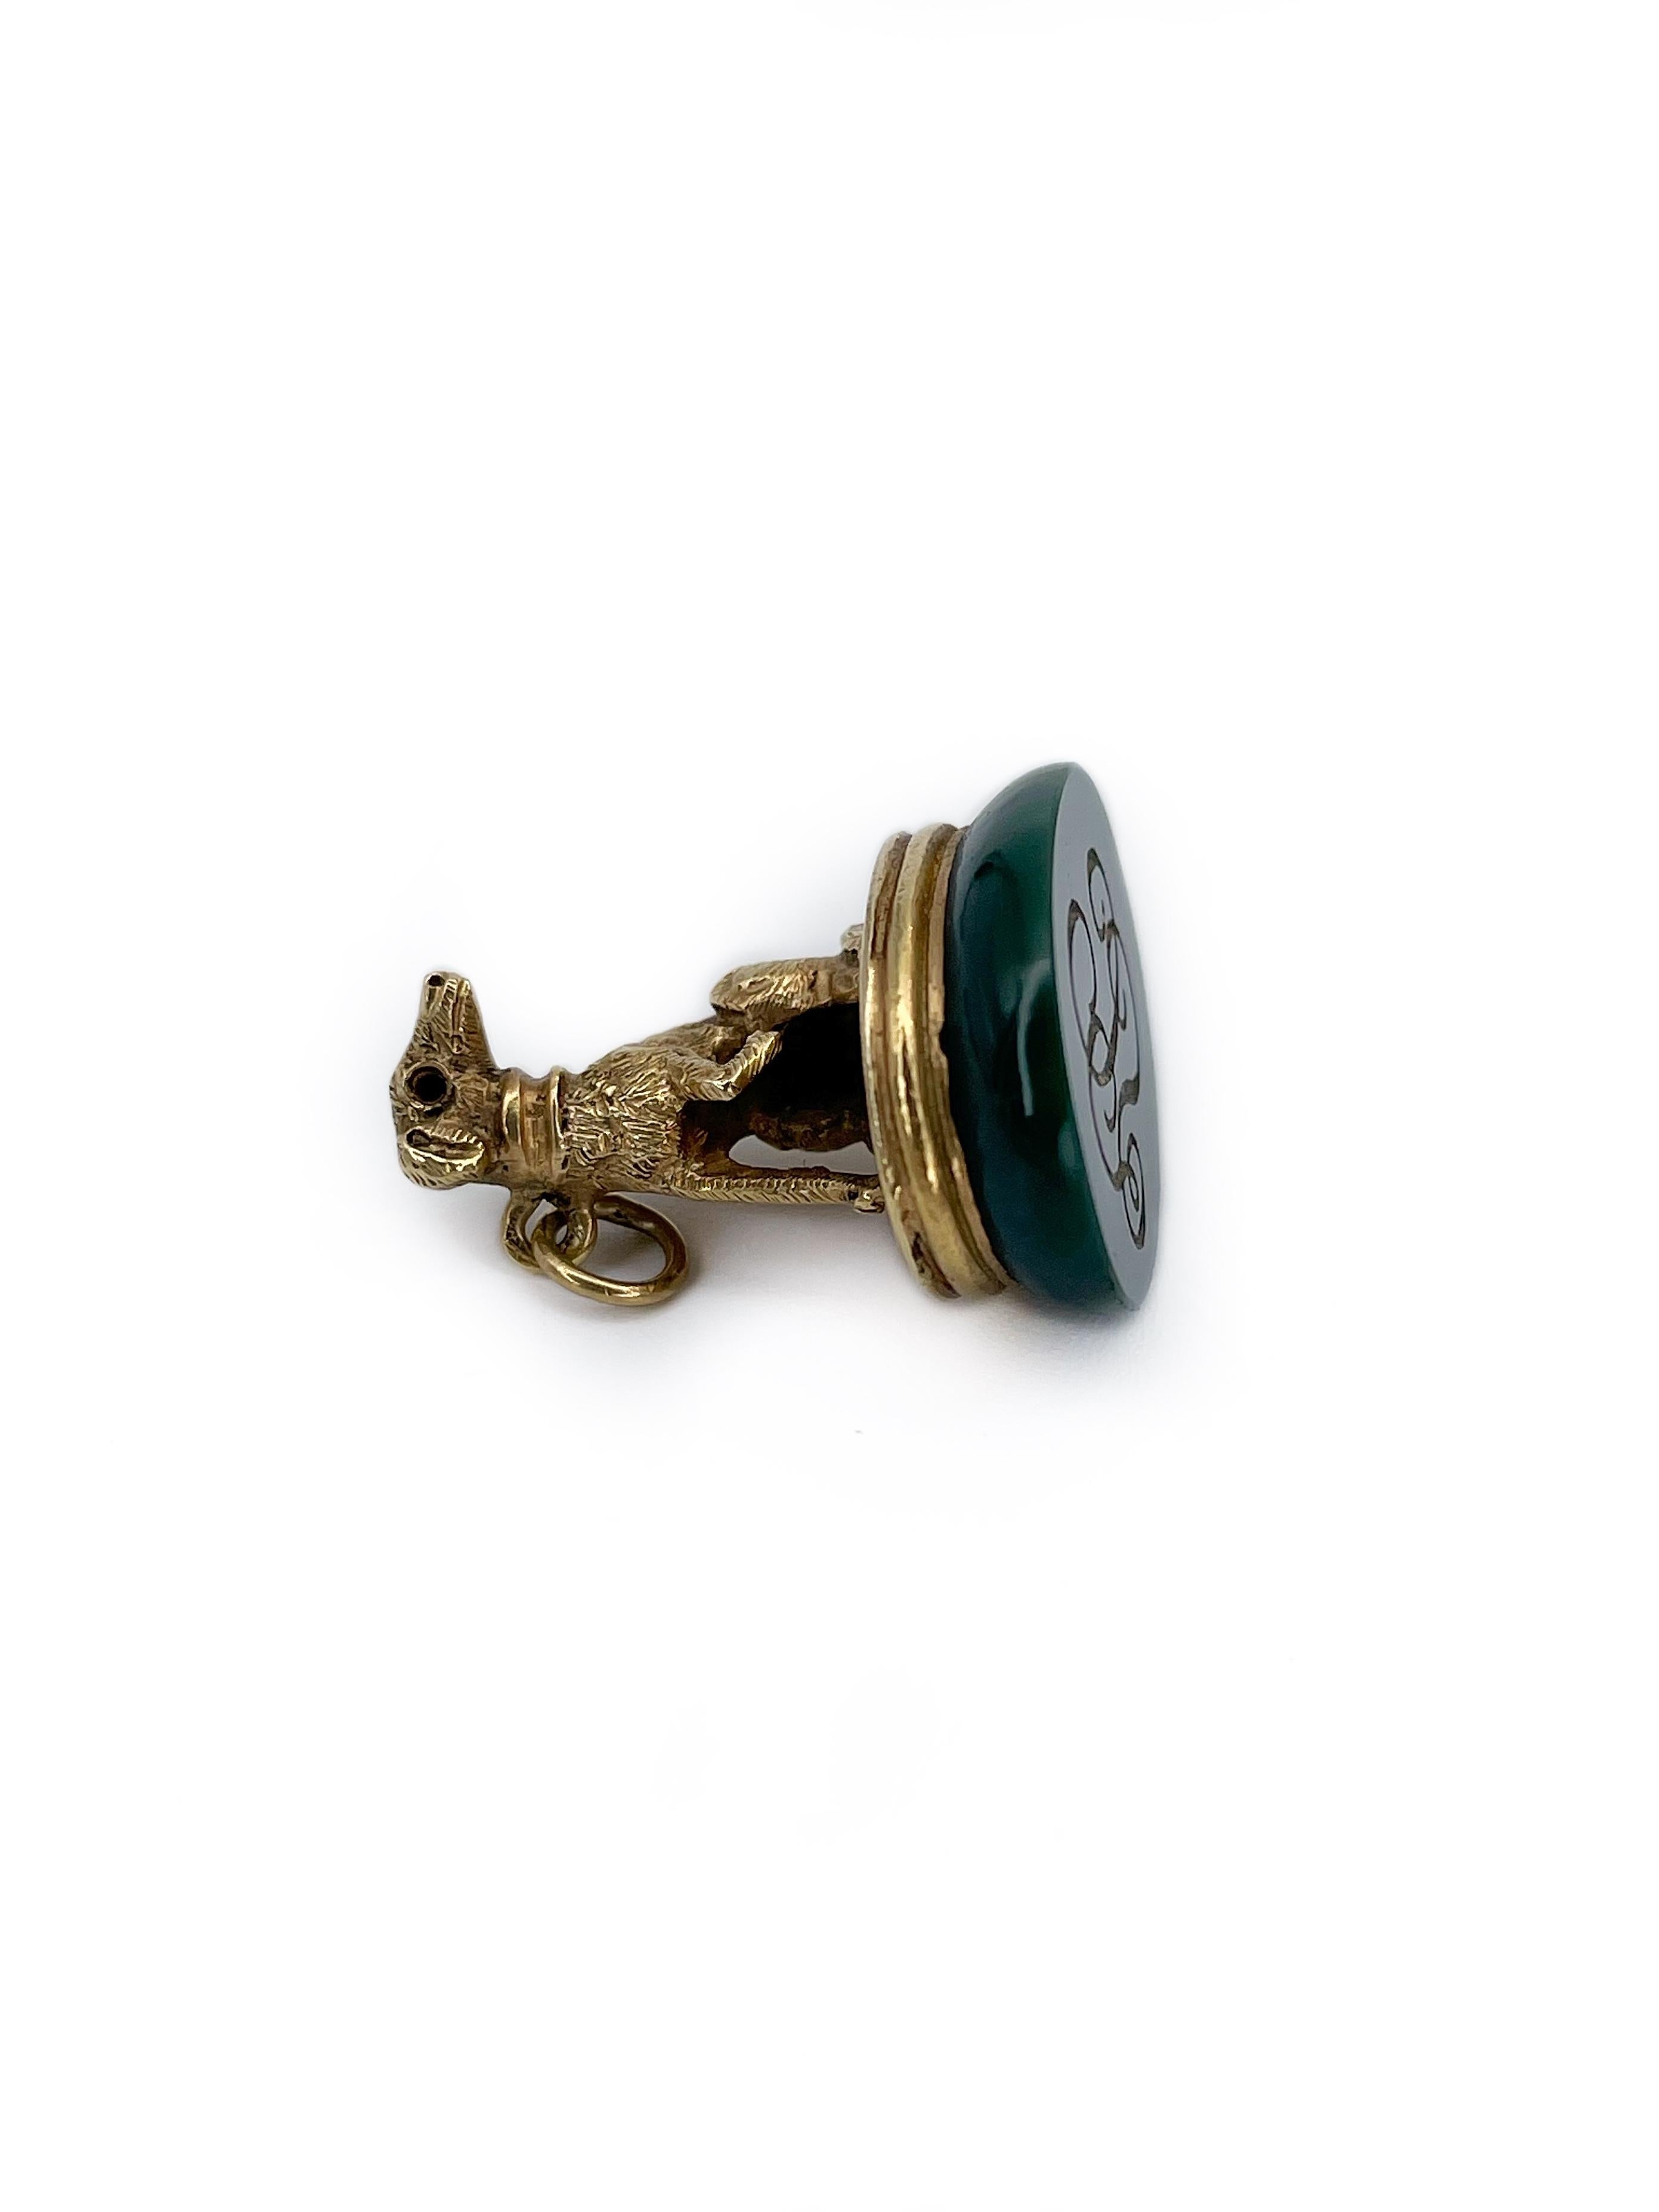 Antique Victorian 14 Karat Gold Heliotrope Figural Dog Watch Fob Seal Pendant 2